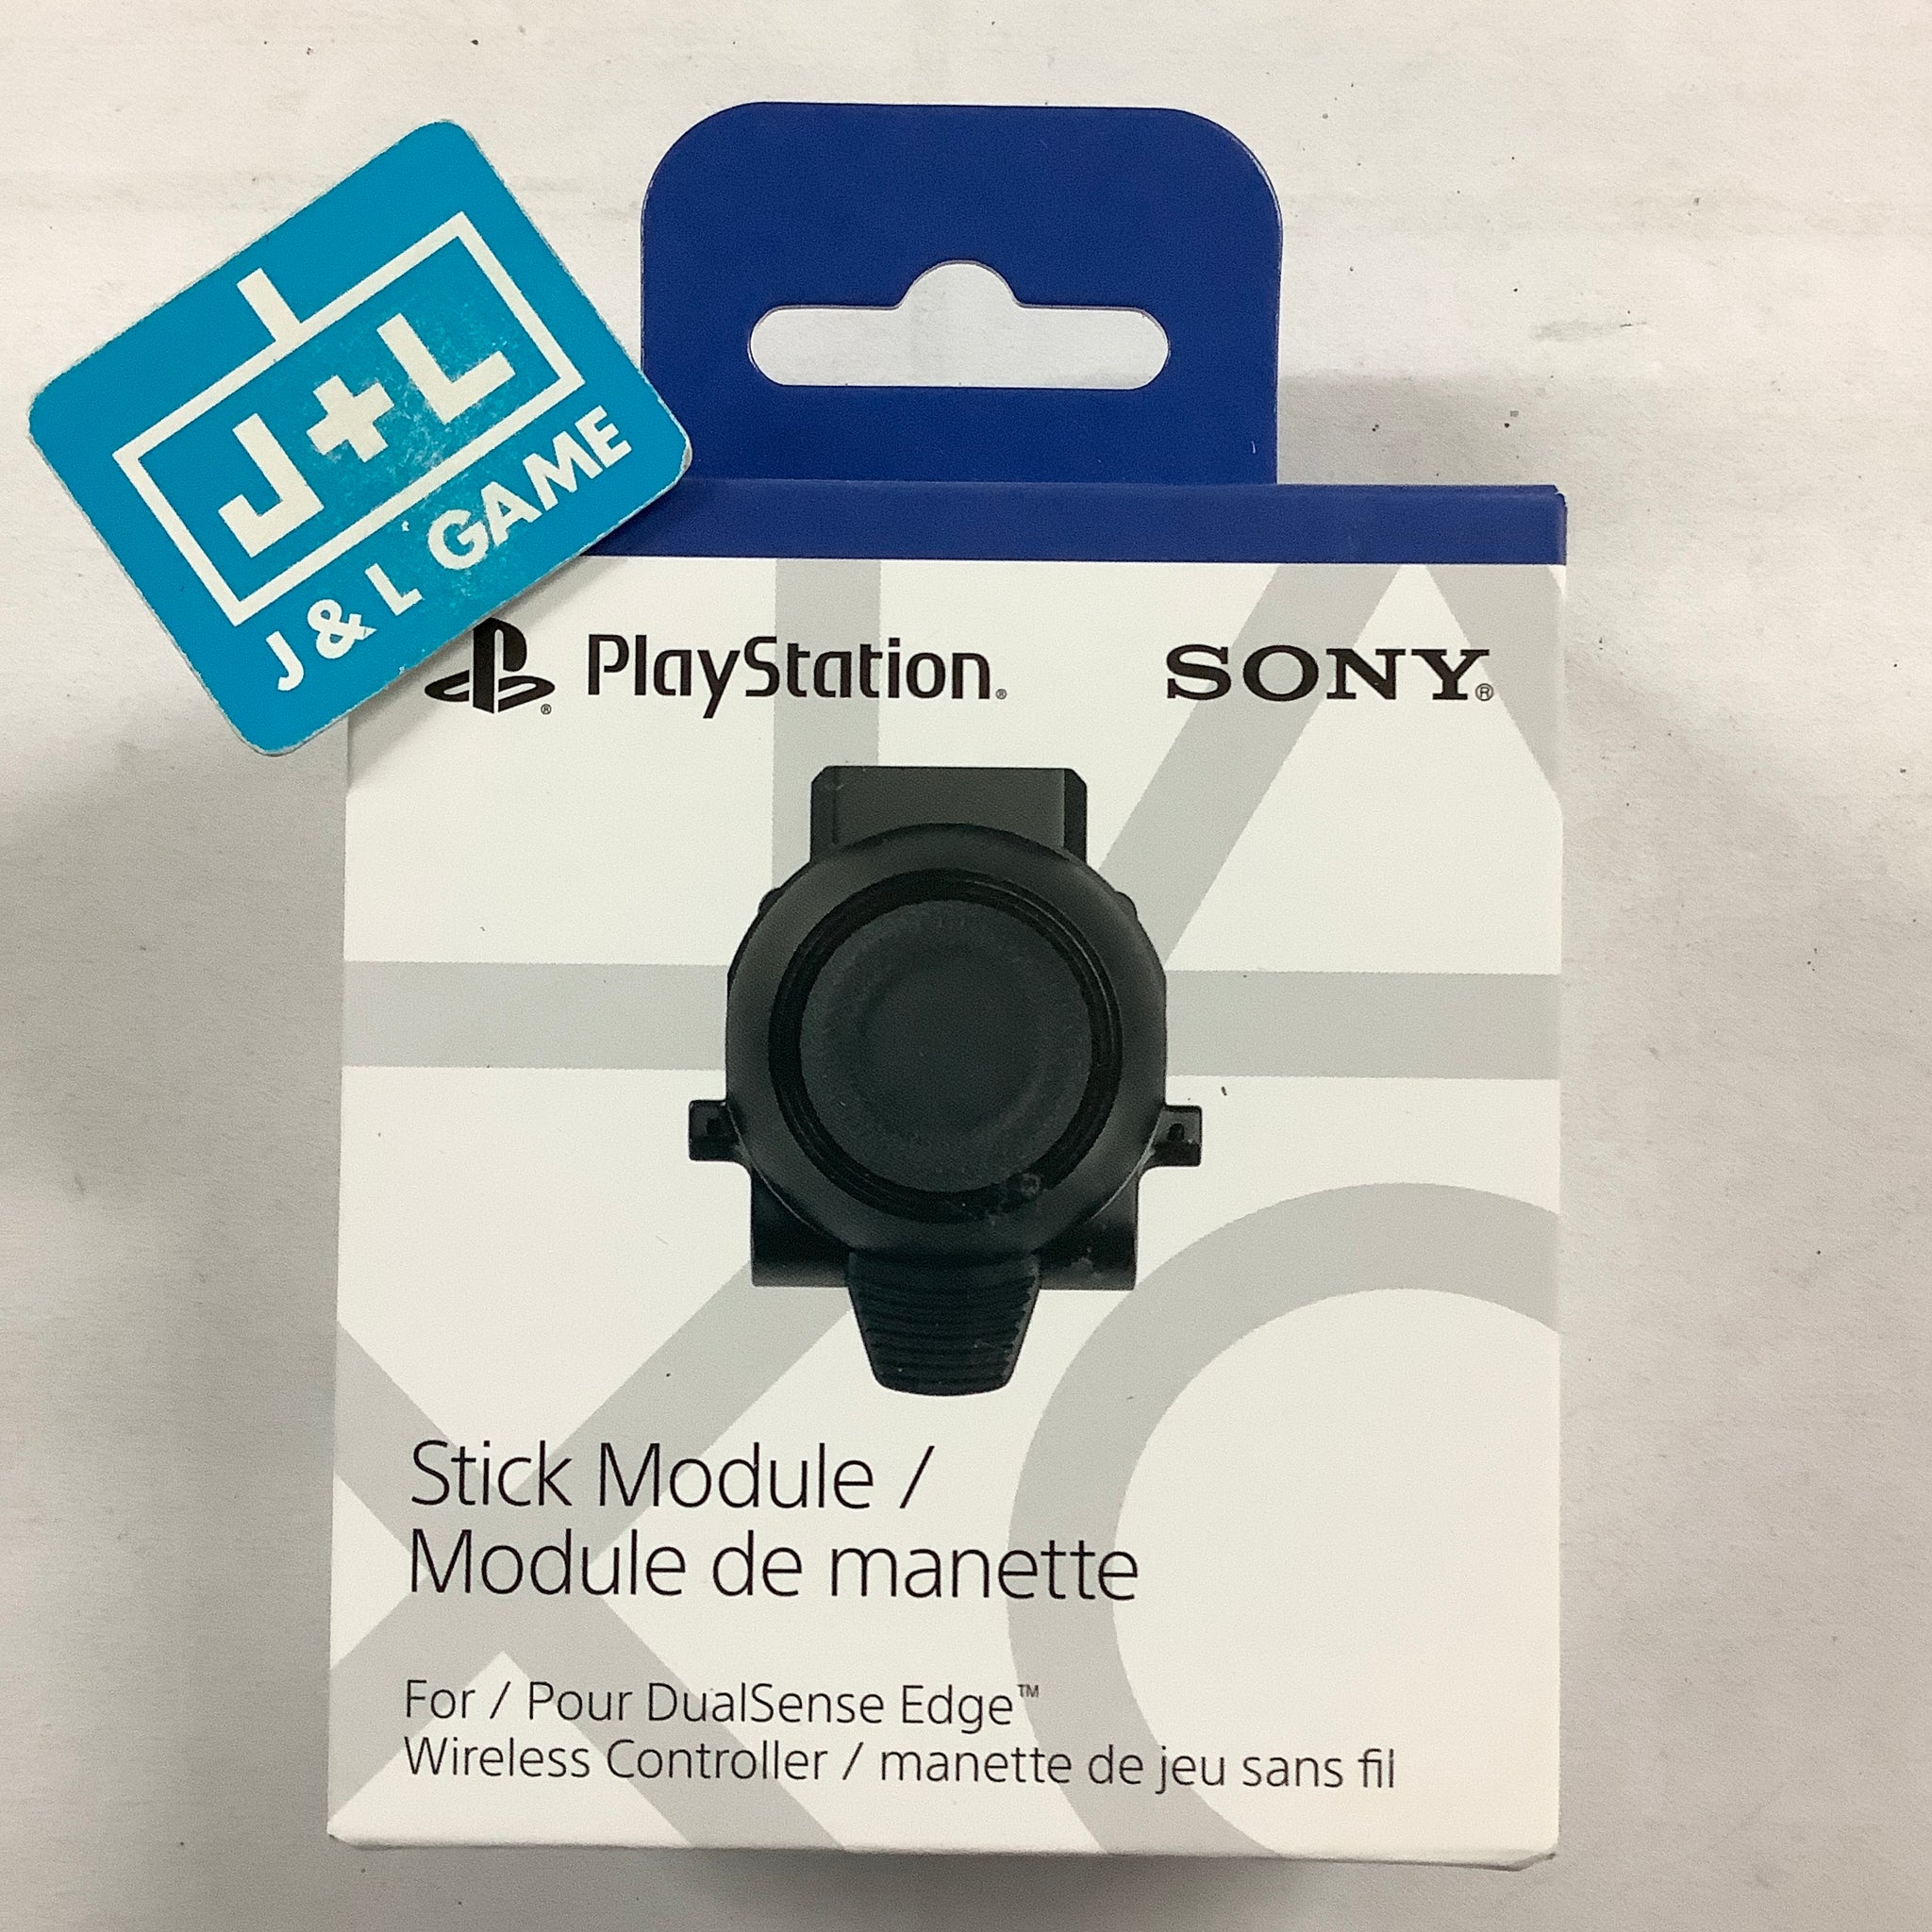 Sony PS5 DualSense Edge™ wireless controller